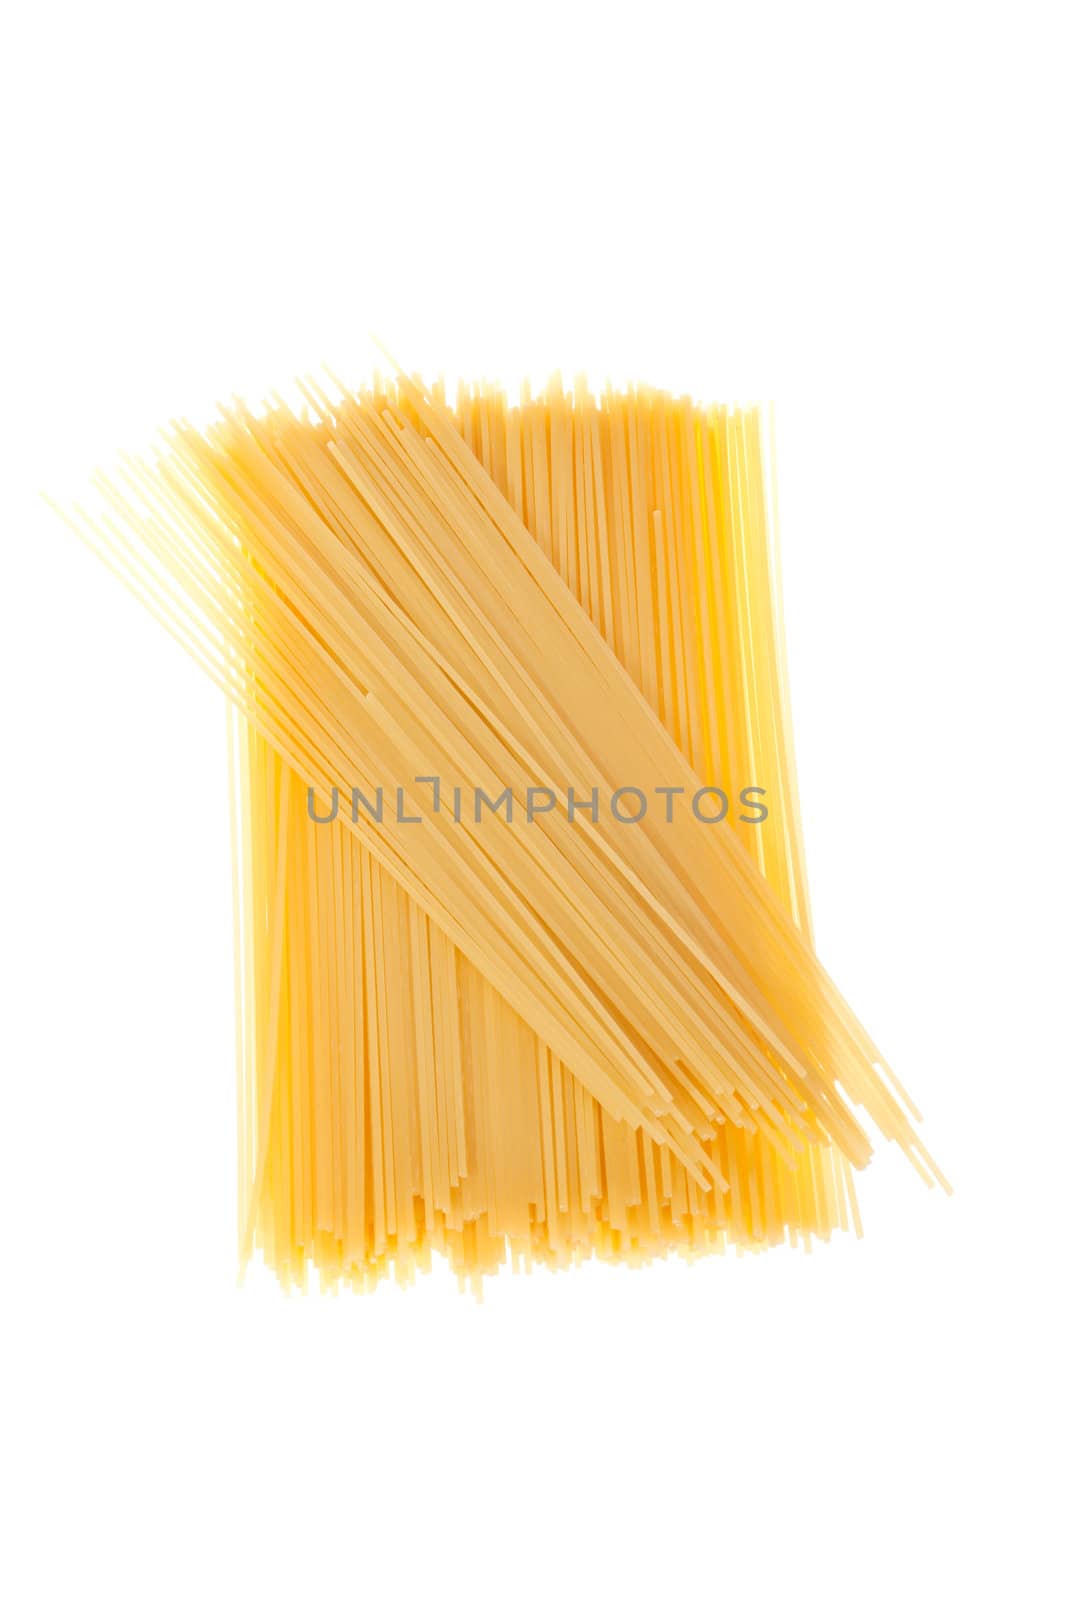 uncooked spaghetti, photo on the white background